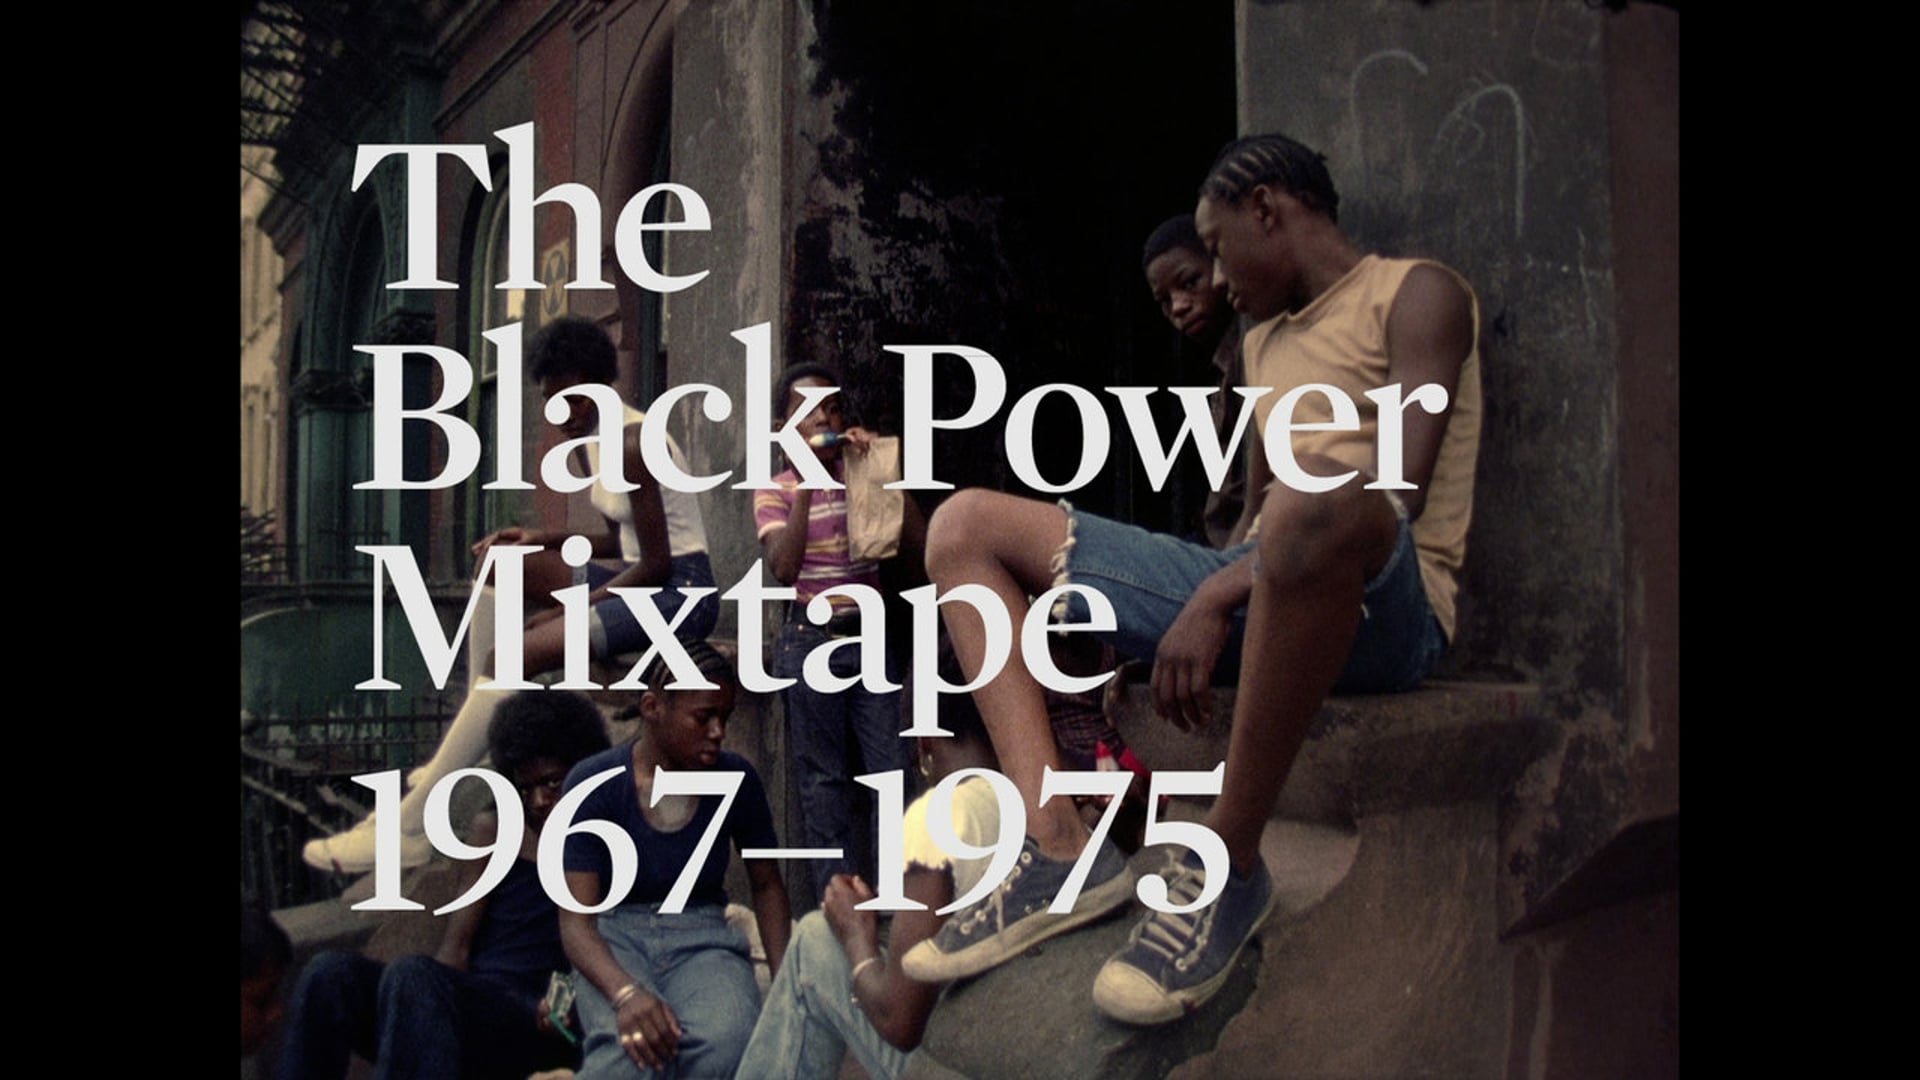 The Black Power Mixtape 1967-1975 - Trailer